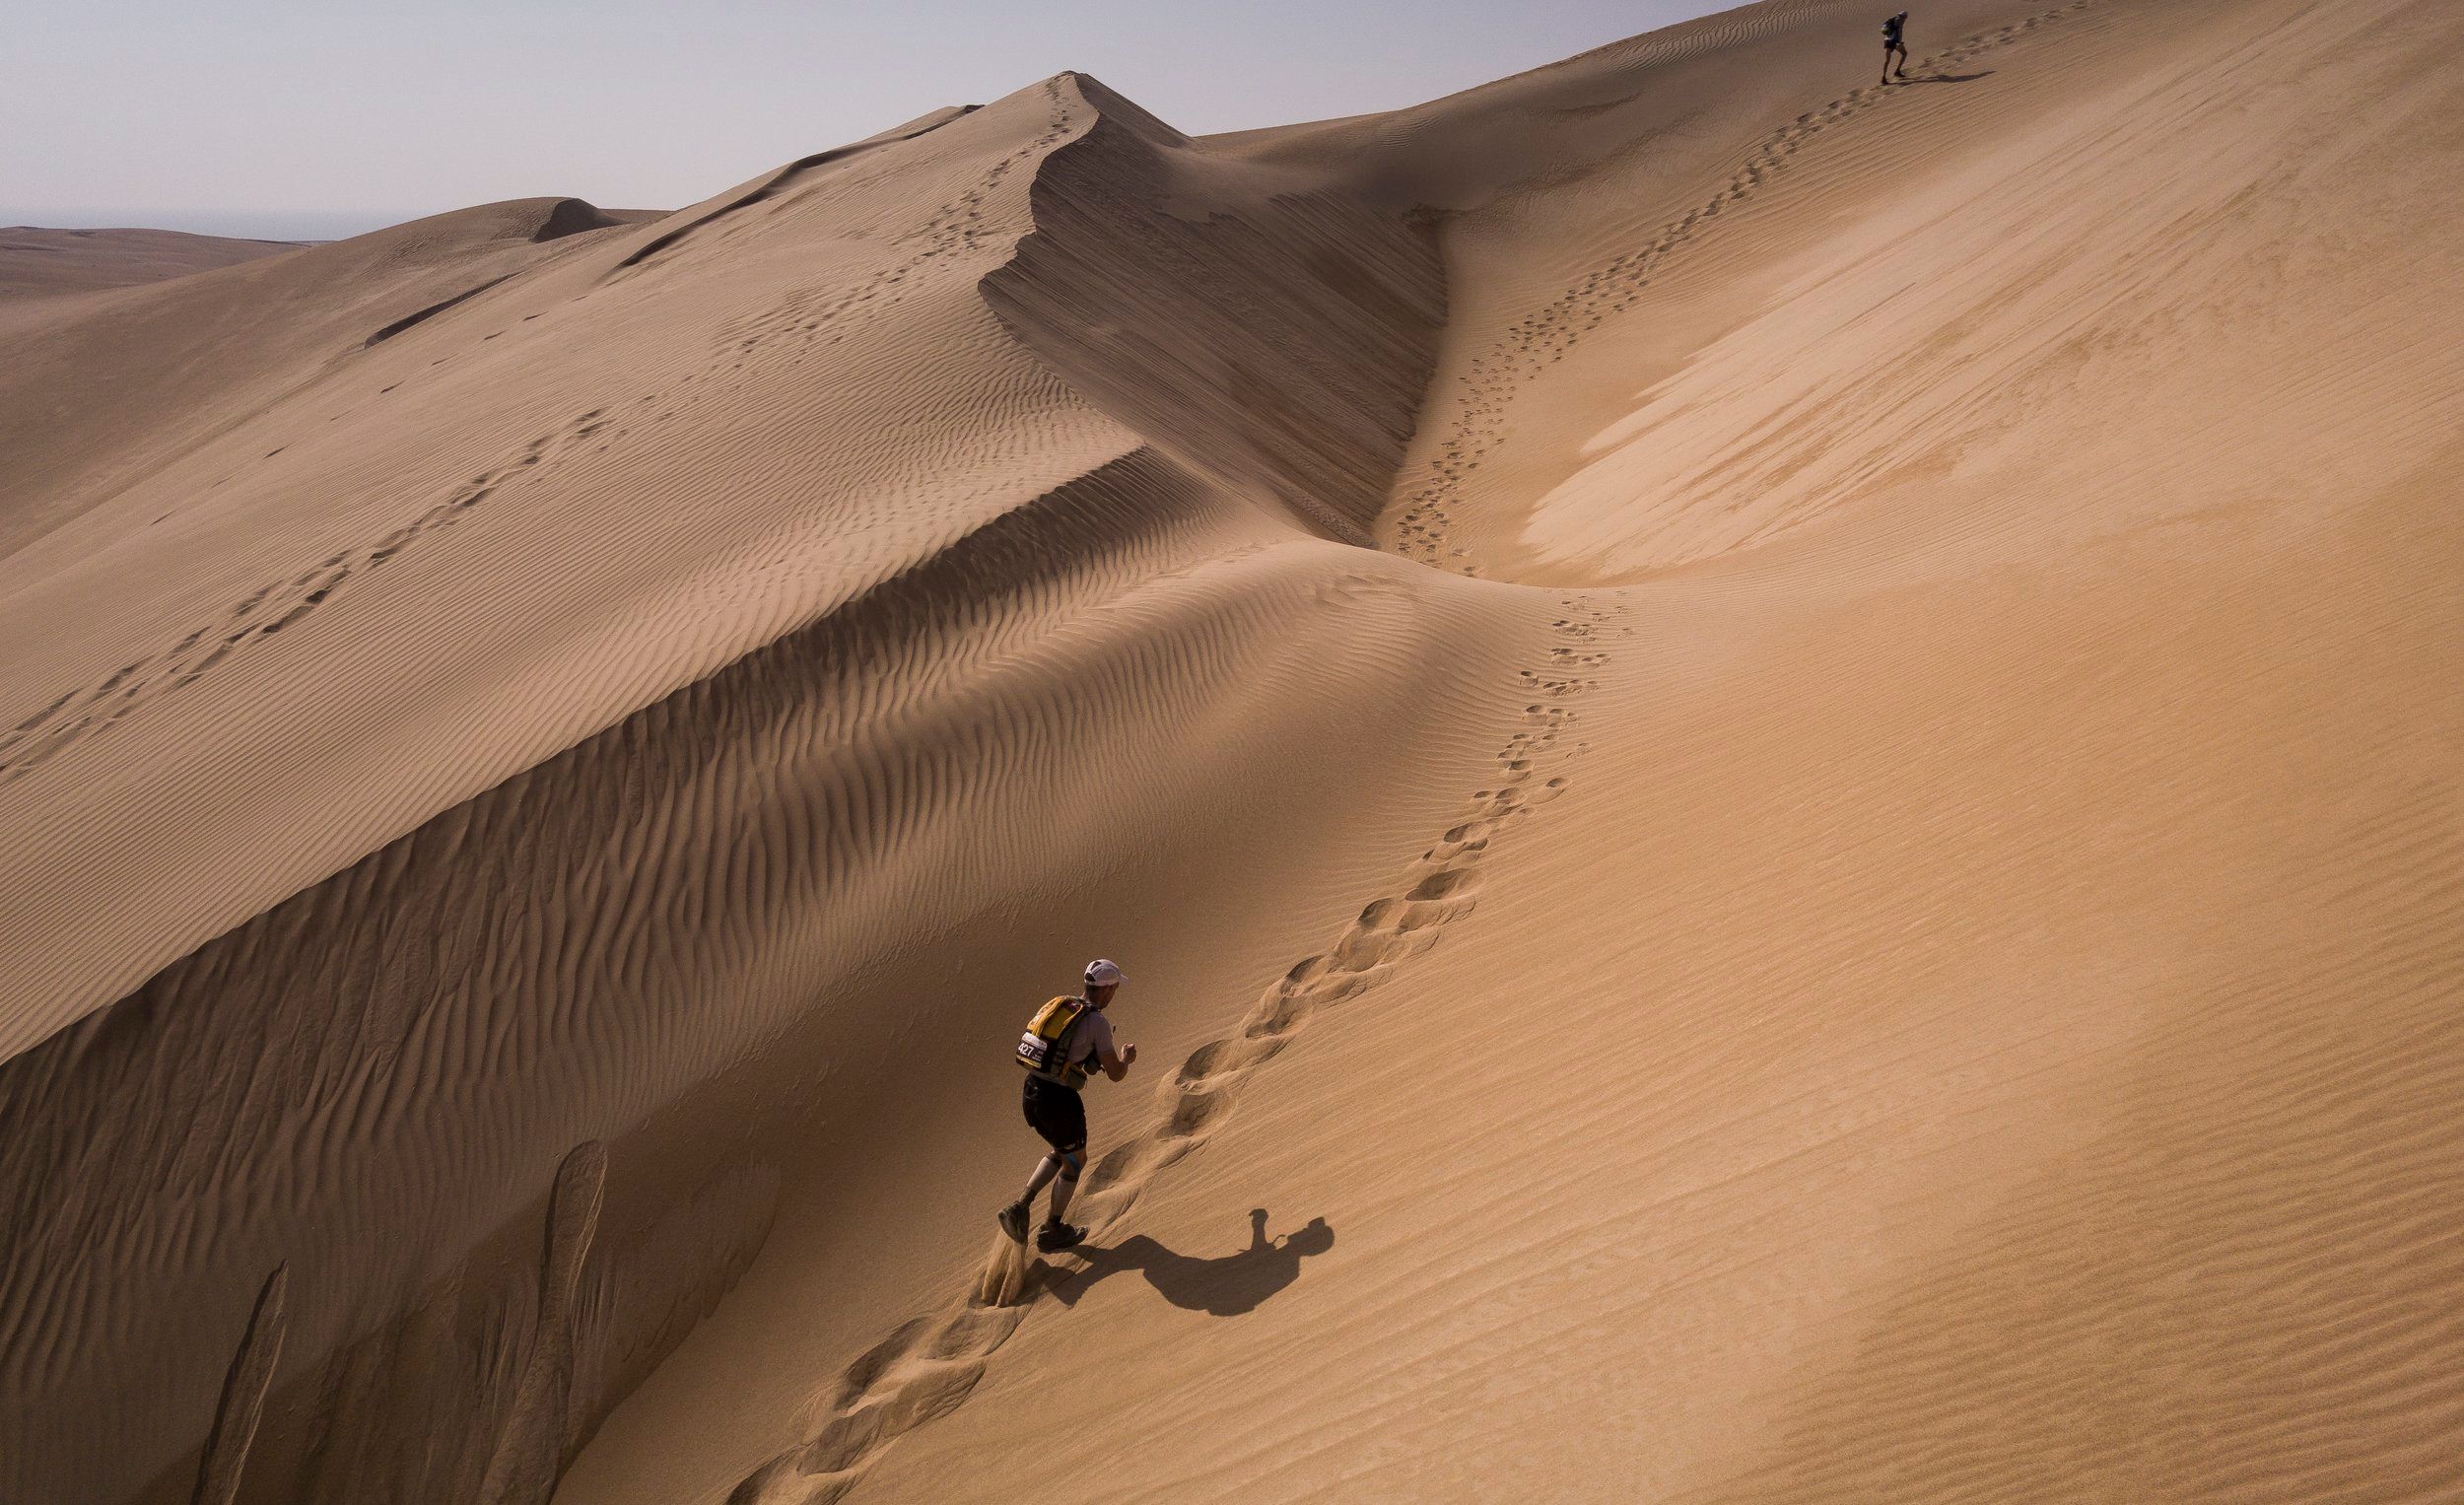 330ft Sand dunes tower above runners on the Oman Desert Marathon course